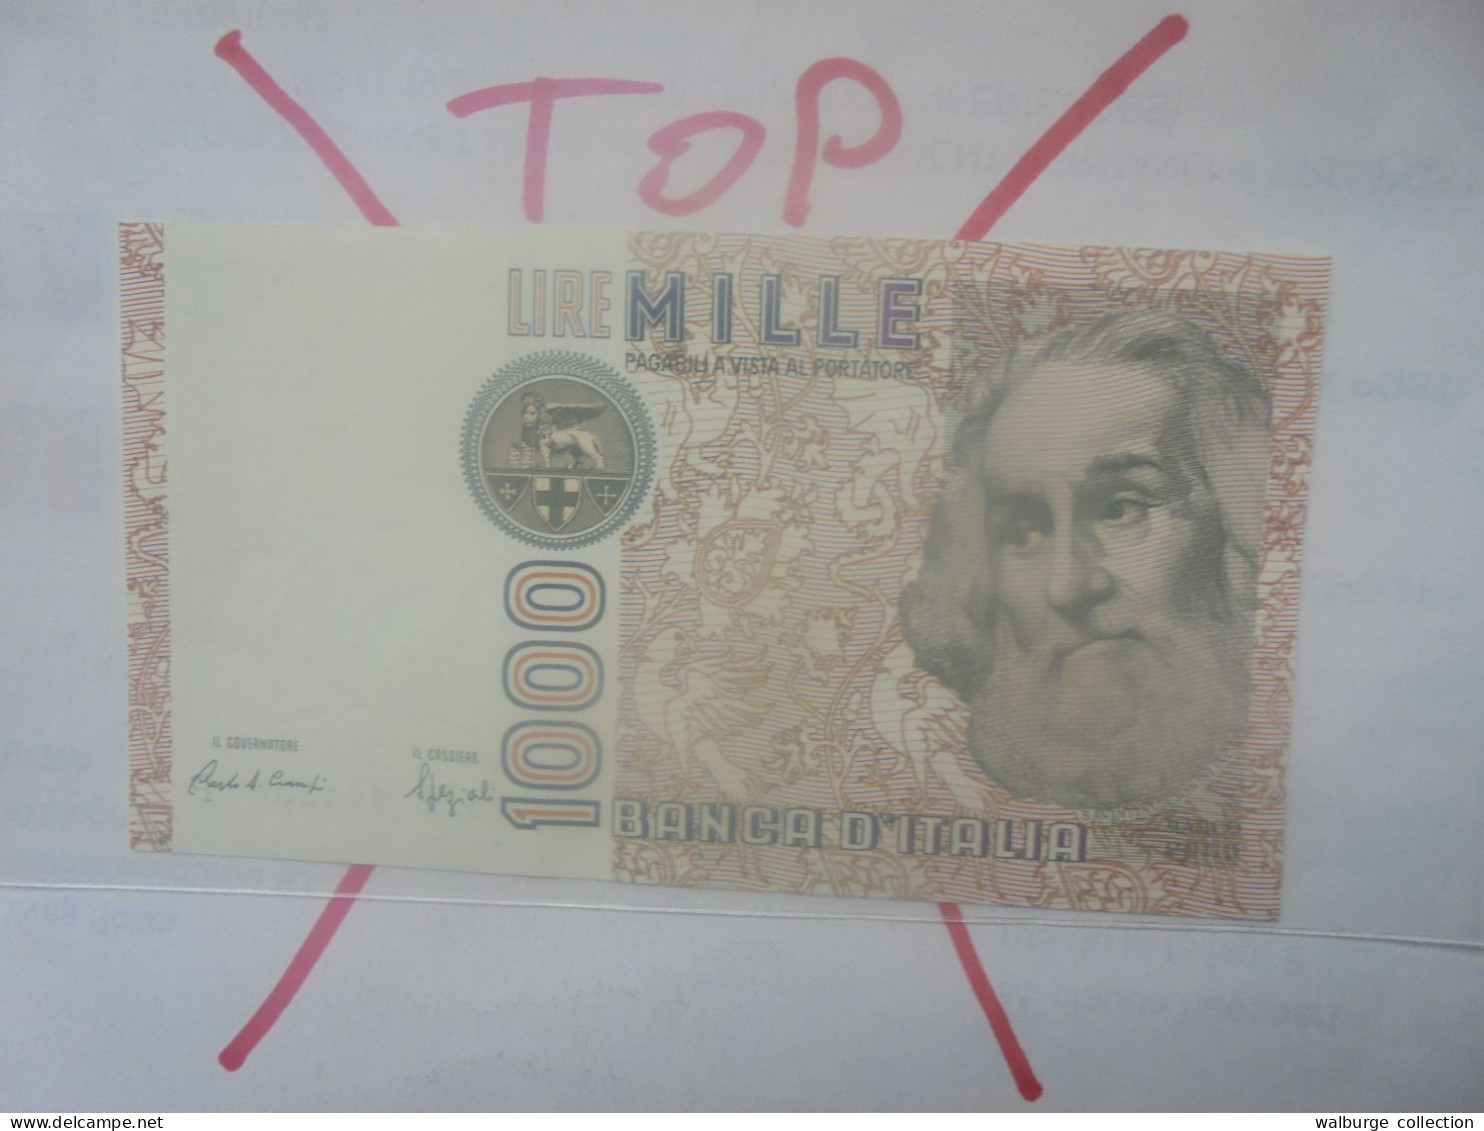 ITALIE 1000 LIRE 1982 Neuf (B.33) - 1.000 Lire